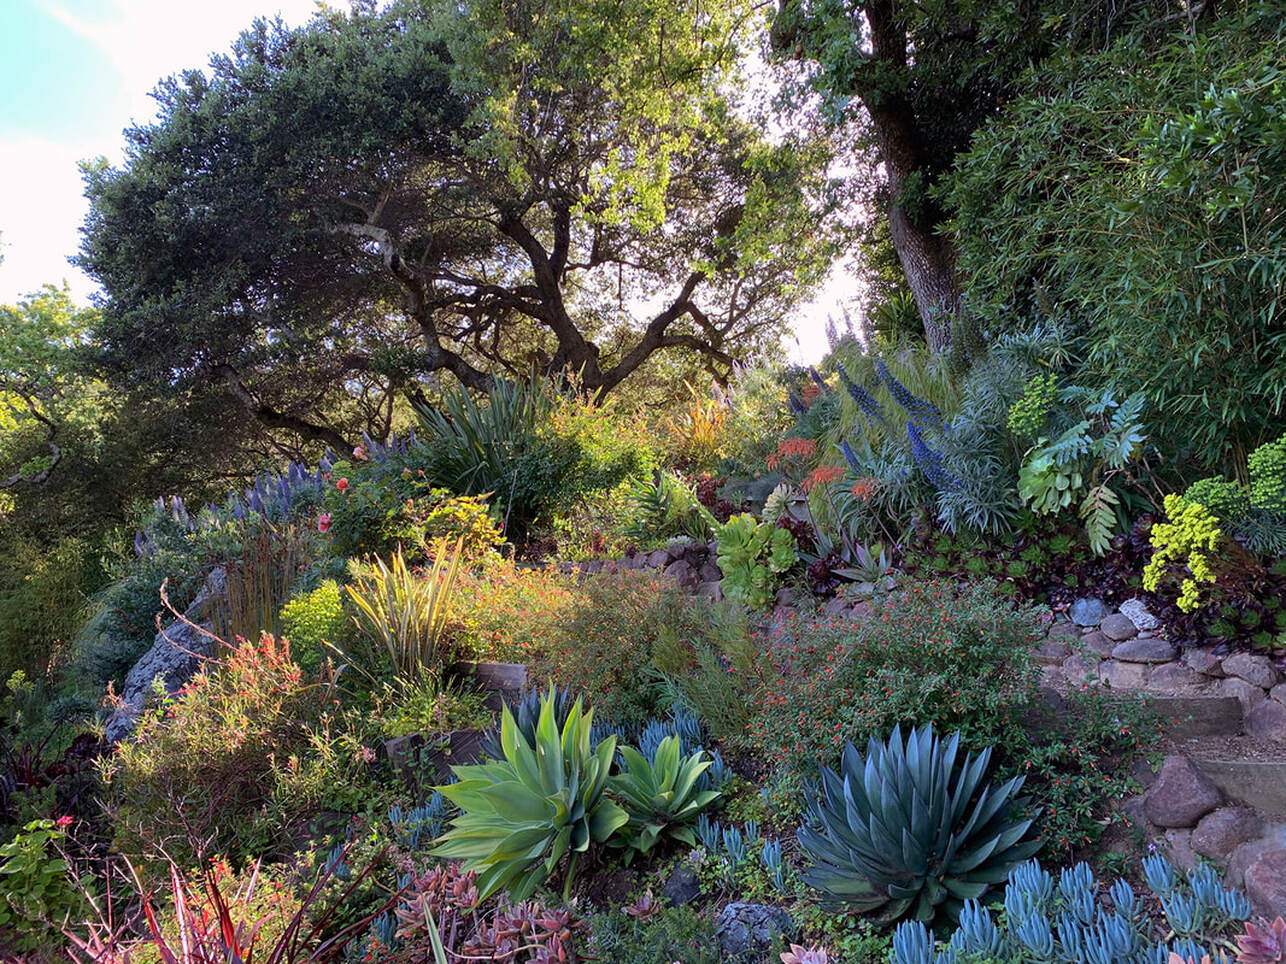 San Anselmo HIllside Sanctuary Garden - Dig Your Garden Landscape